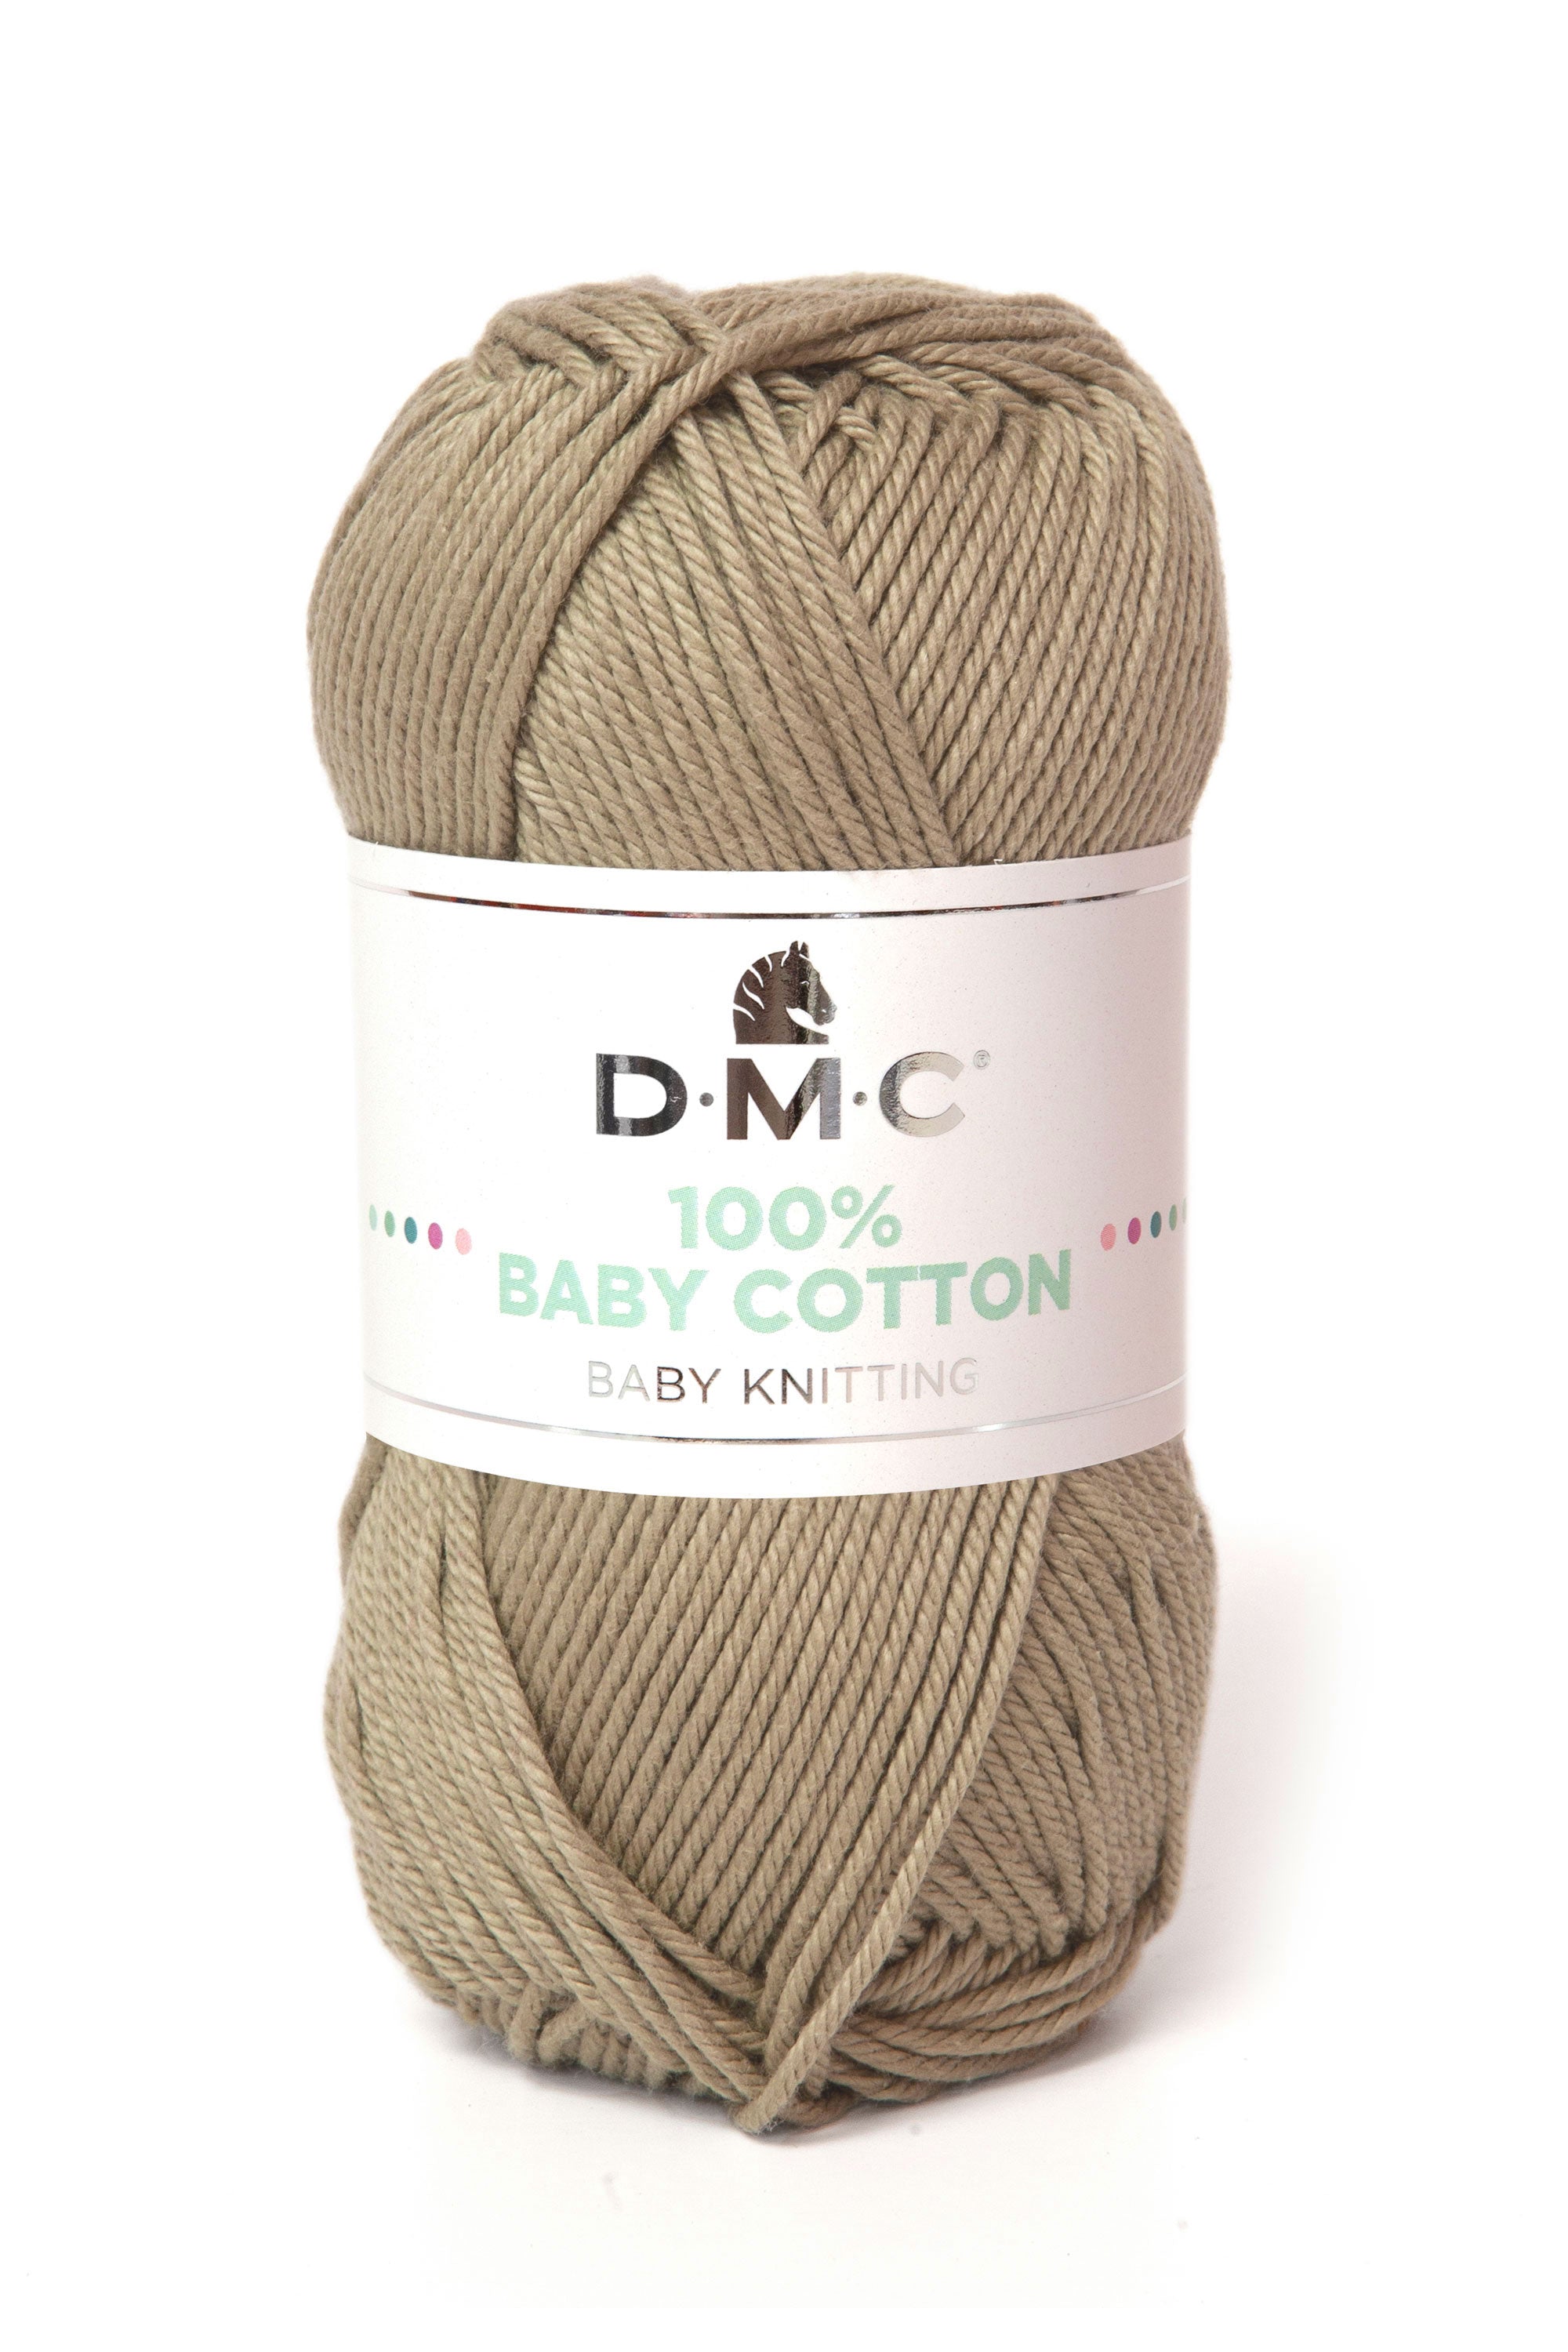 Lana Dmc 100% Baby Cotton Colore 772